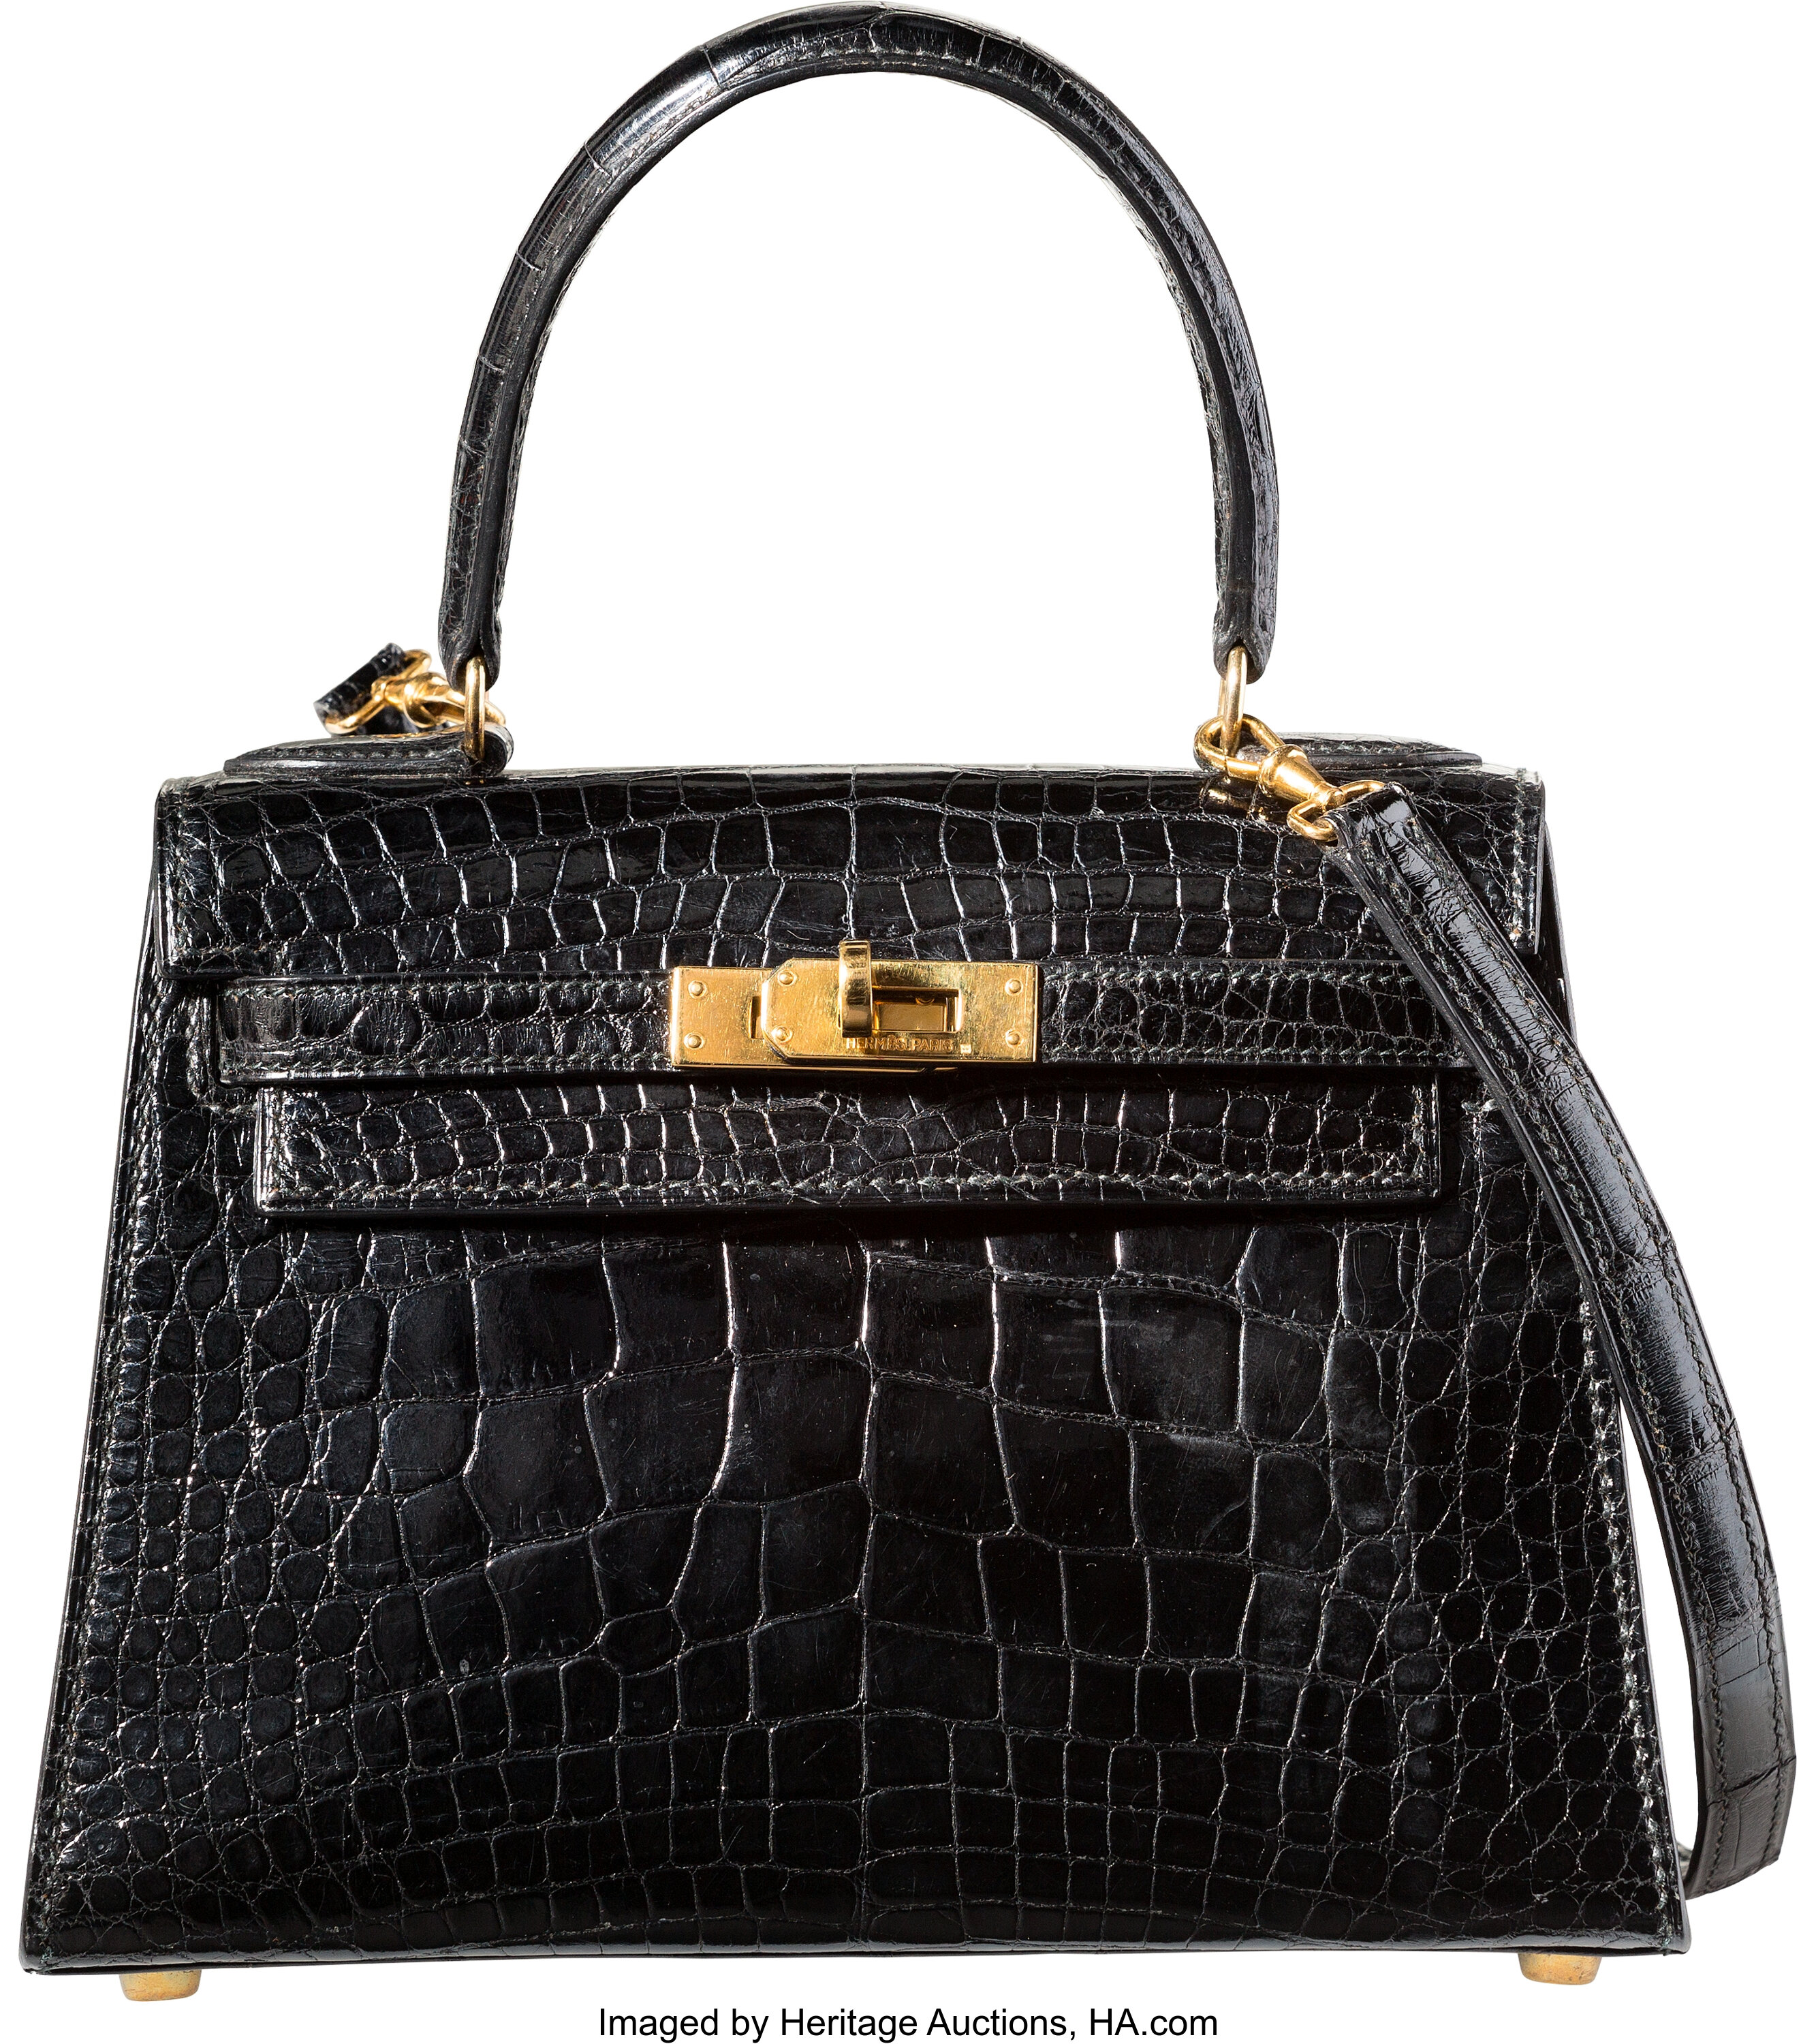 Sold at Auction: Hermes Kelly Black Crocodile Bag